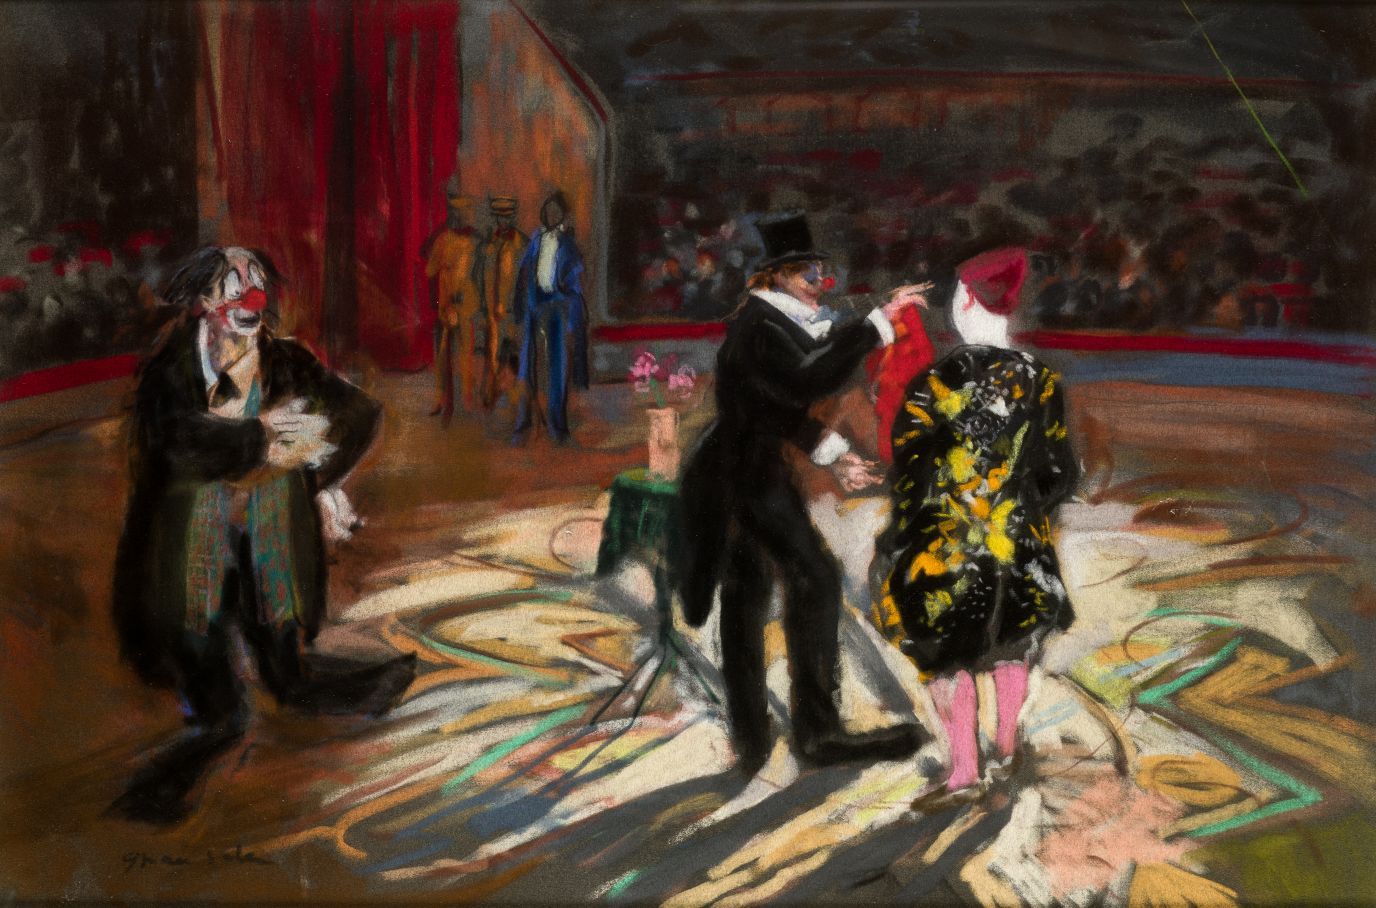 EMILIO GRAU SALA (1911 / 1975) "The circus" 左下角有签名 天鹅绒画布上的粉笔画 54 x 81 cm